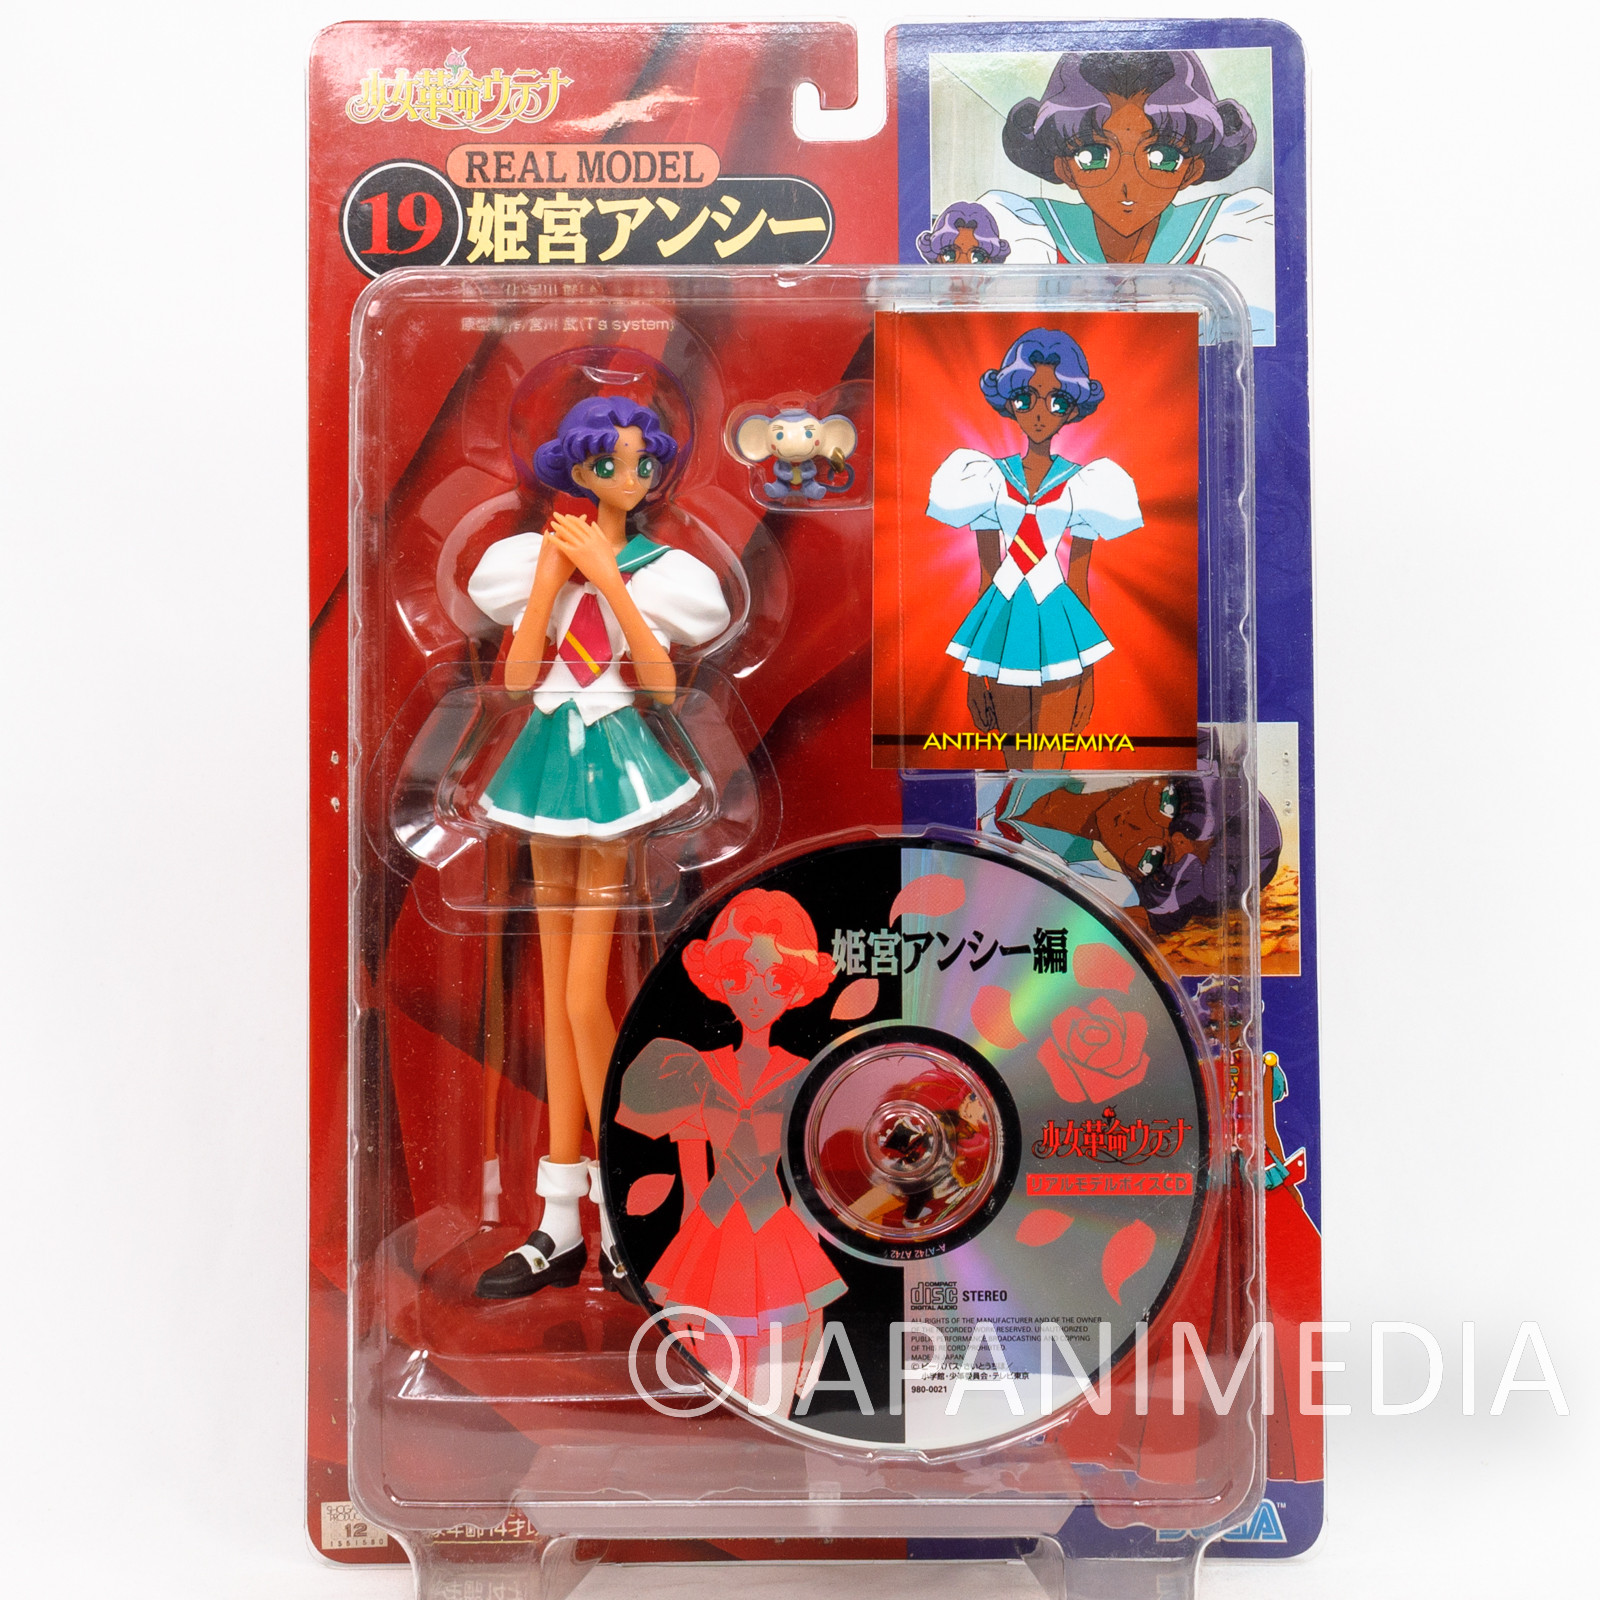 Revolutionary Girl Utena Anthy Himemiya Real Model Figure + Voice CD SEGA JAPAN